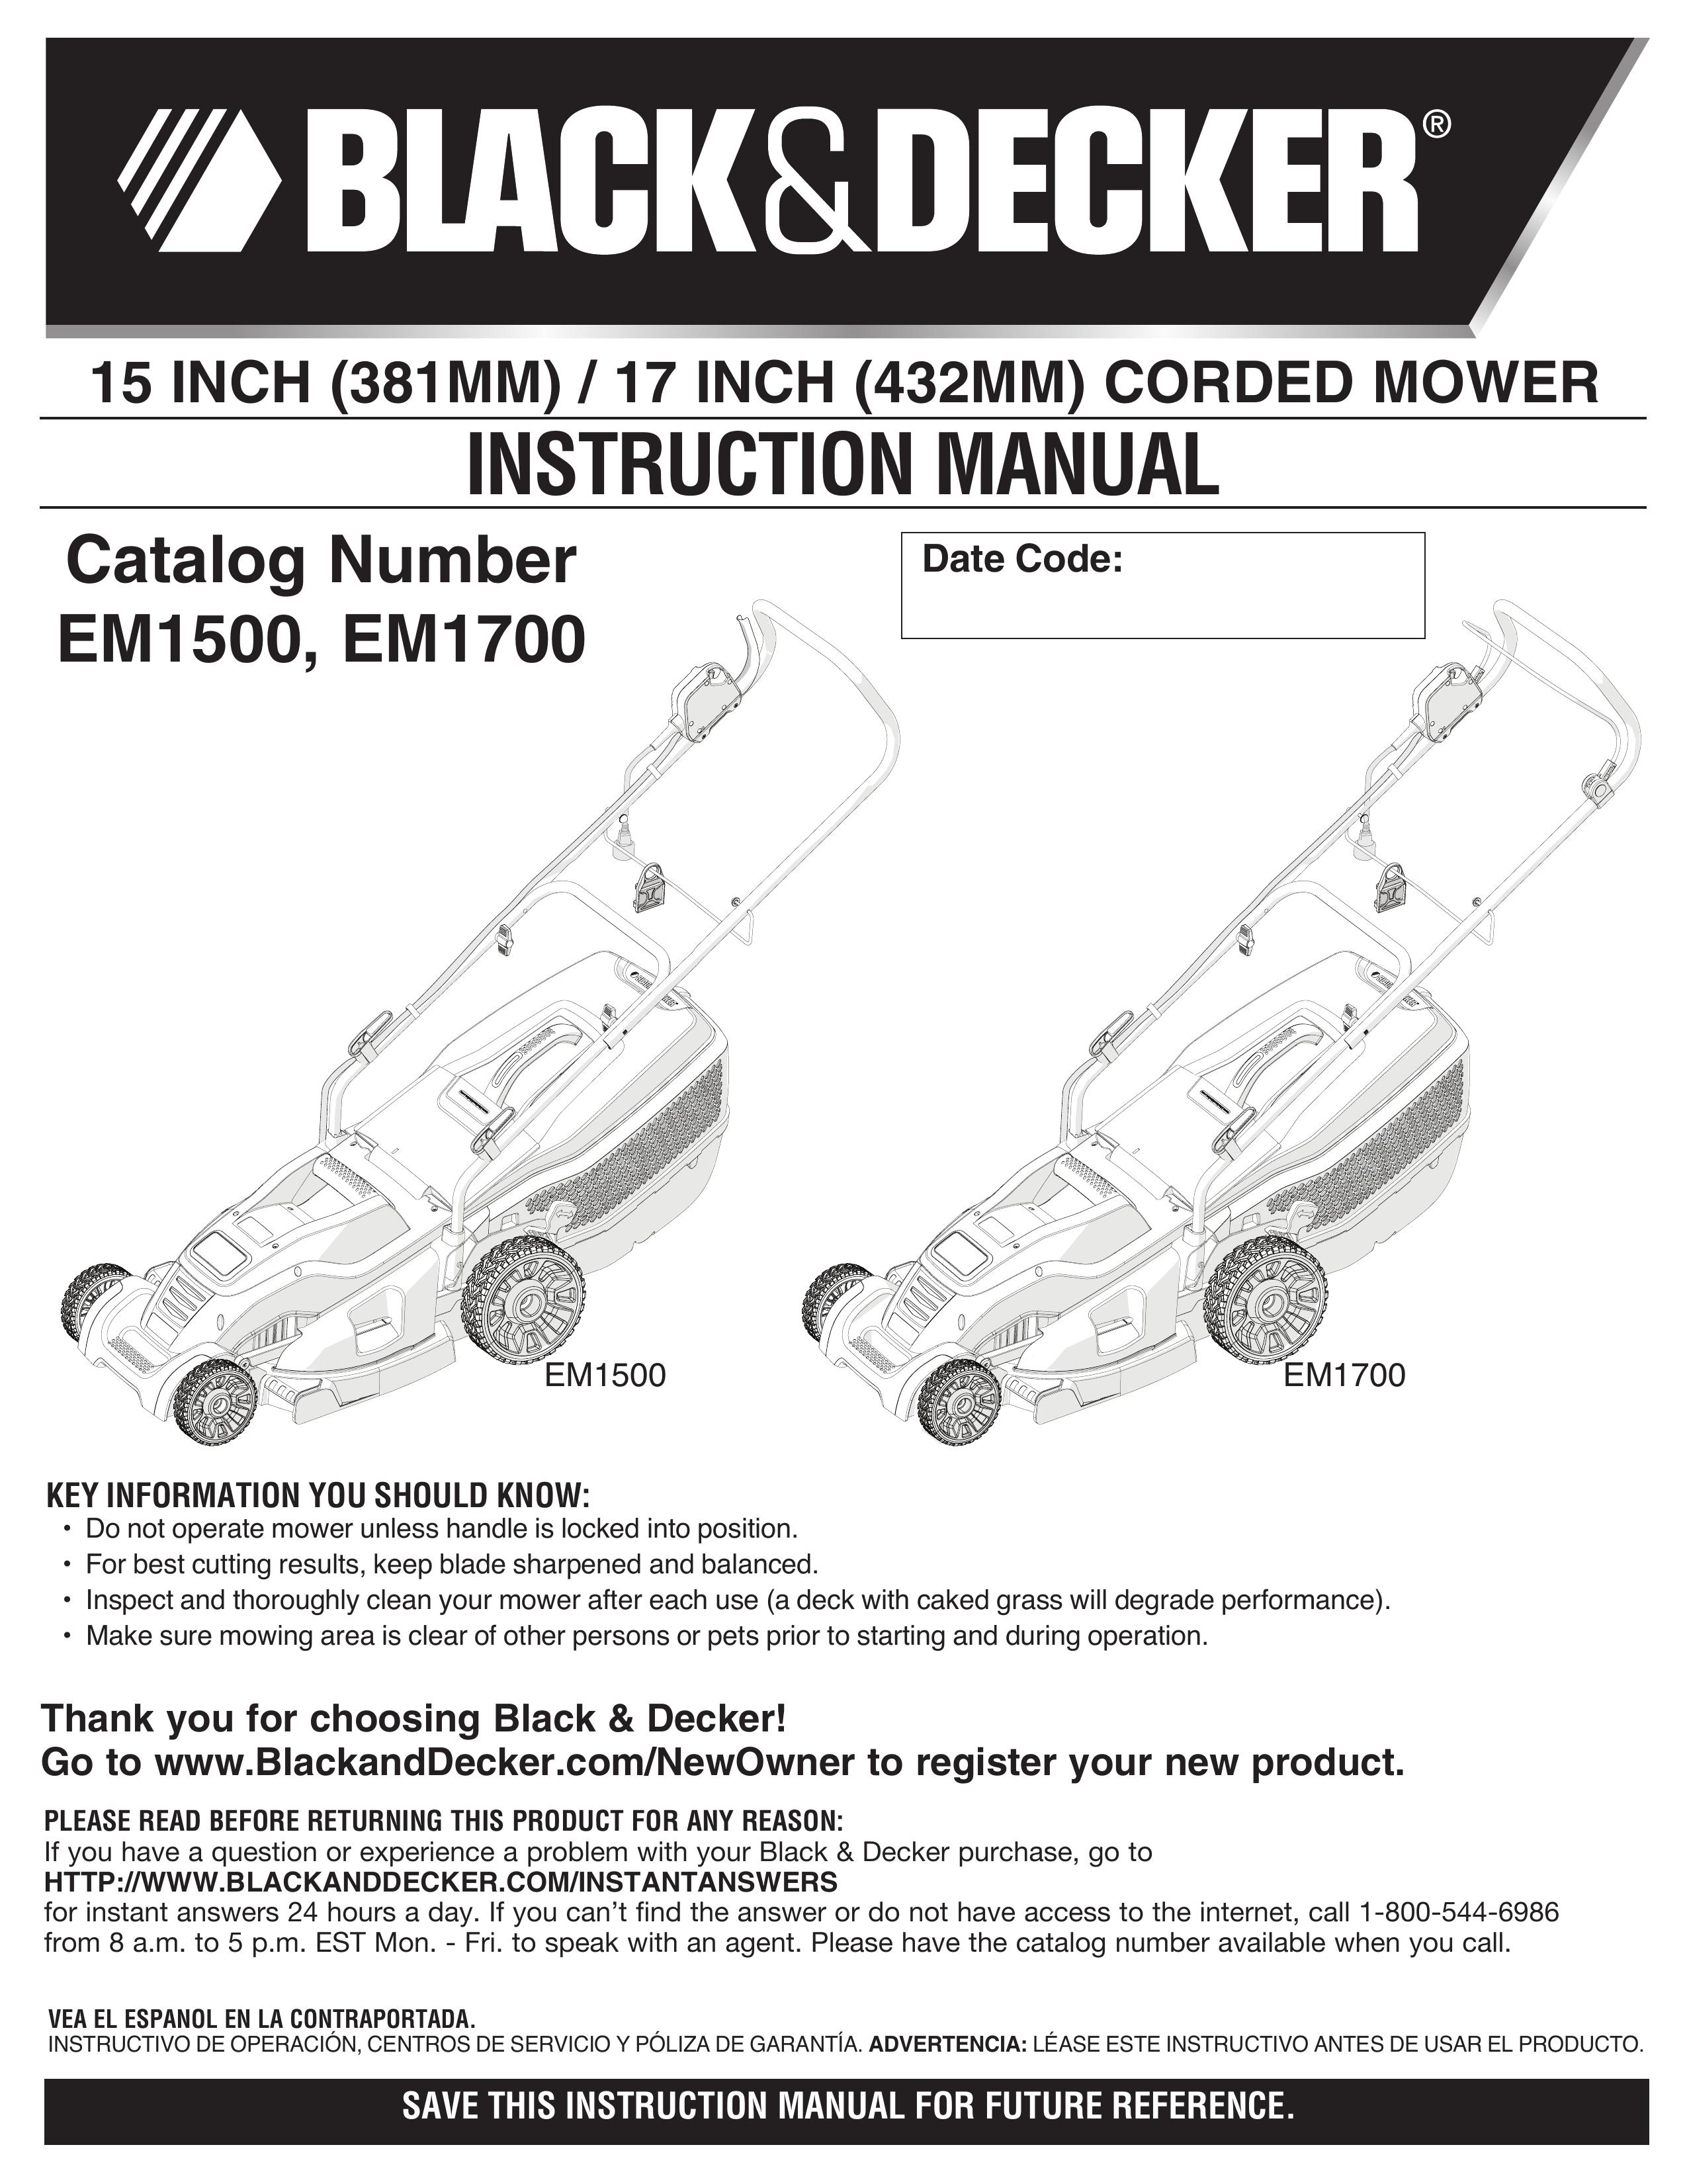 Black & Decker EM1700 Lawn Mower User Manual